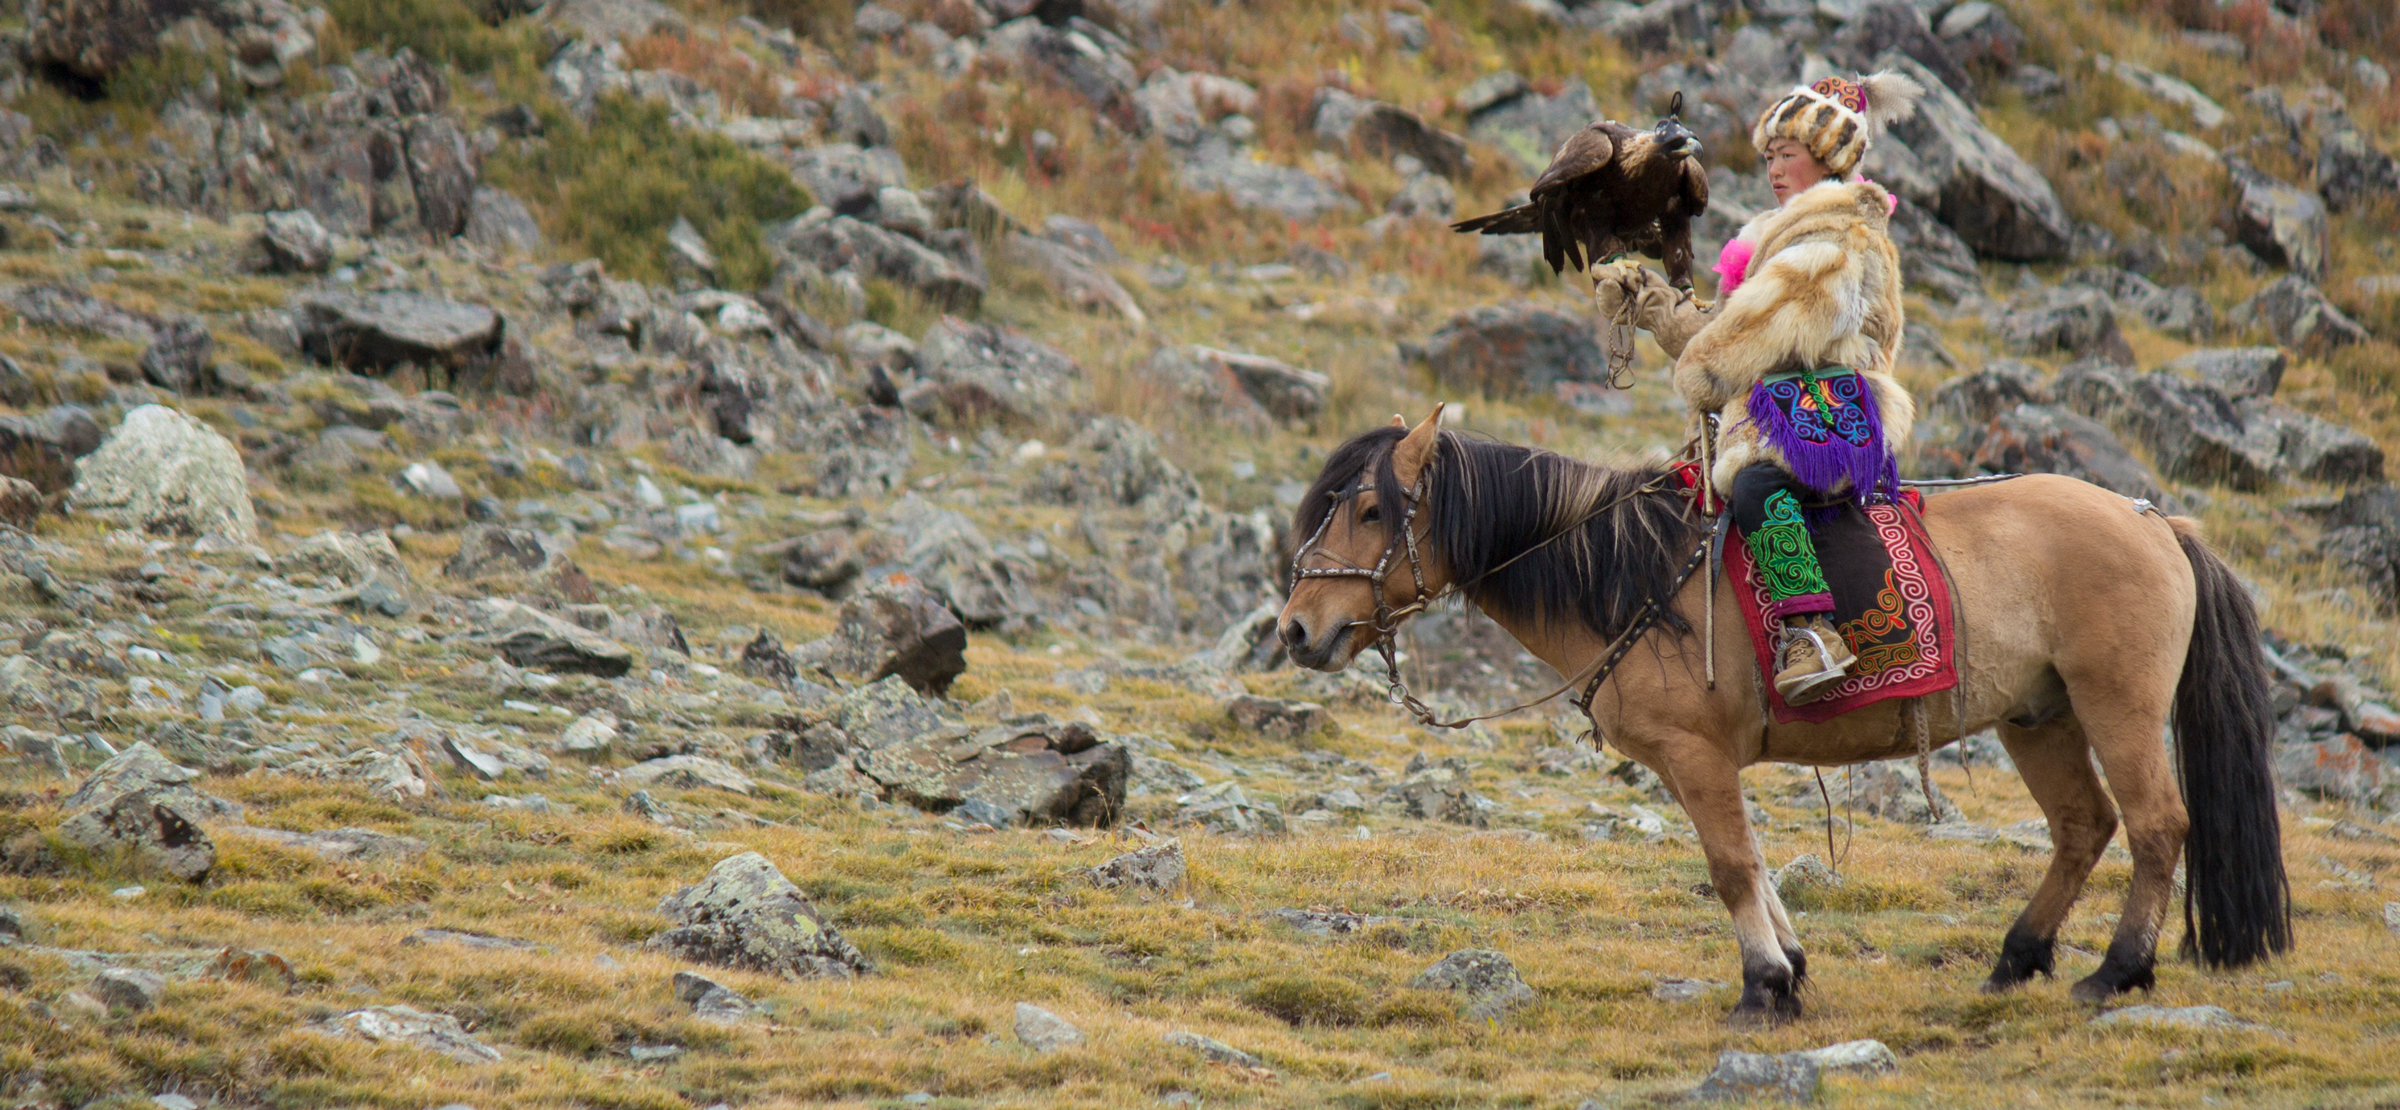 Meeting the nomadic eagle hunters of Mongolia